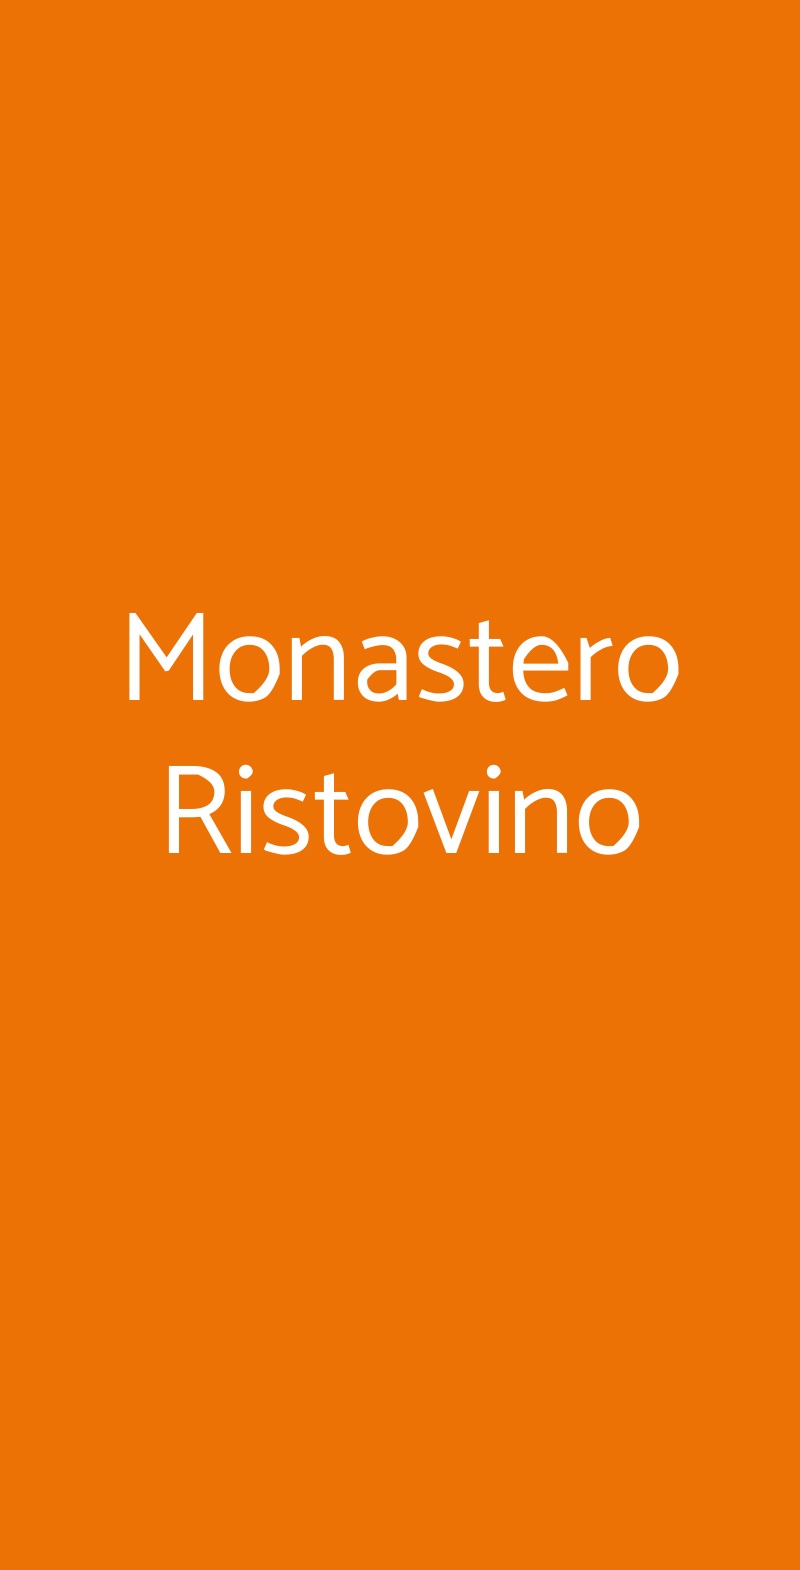 Monastero Ristovino Napoli menù 1 pagina